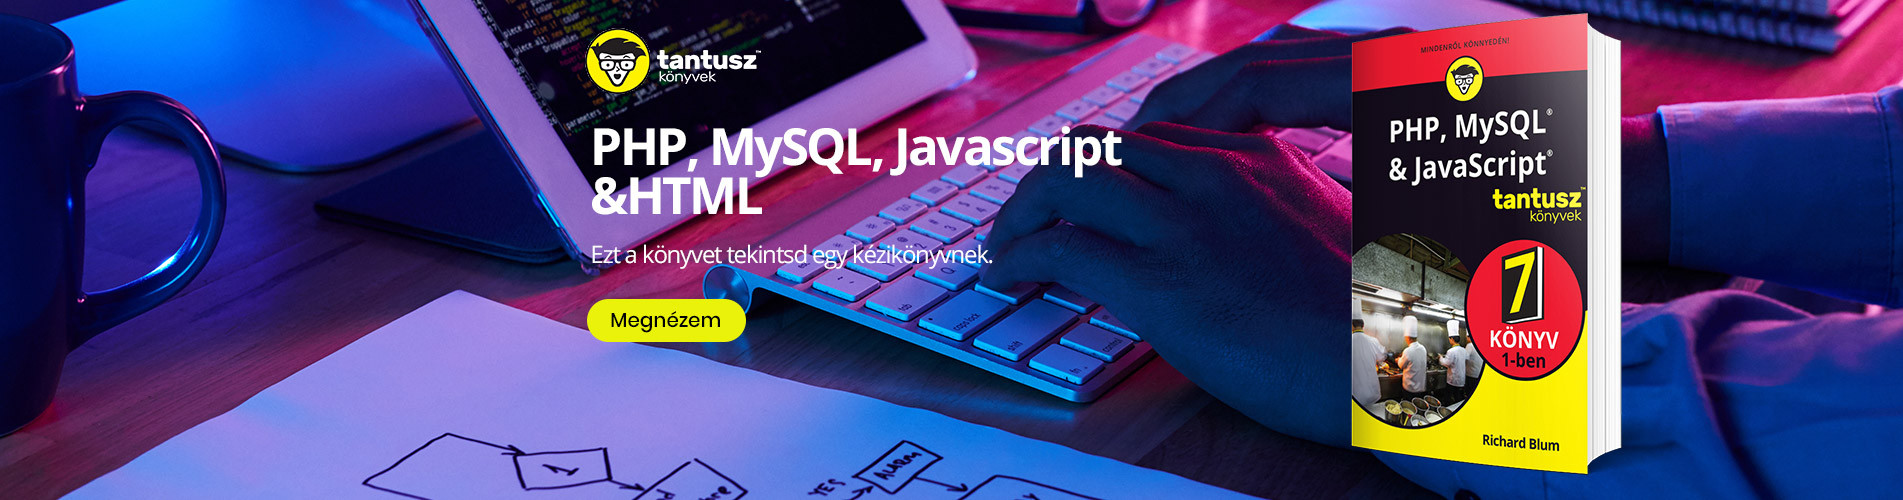 PHP, MySQL, Javascript &HTML